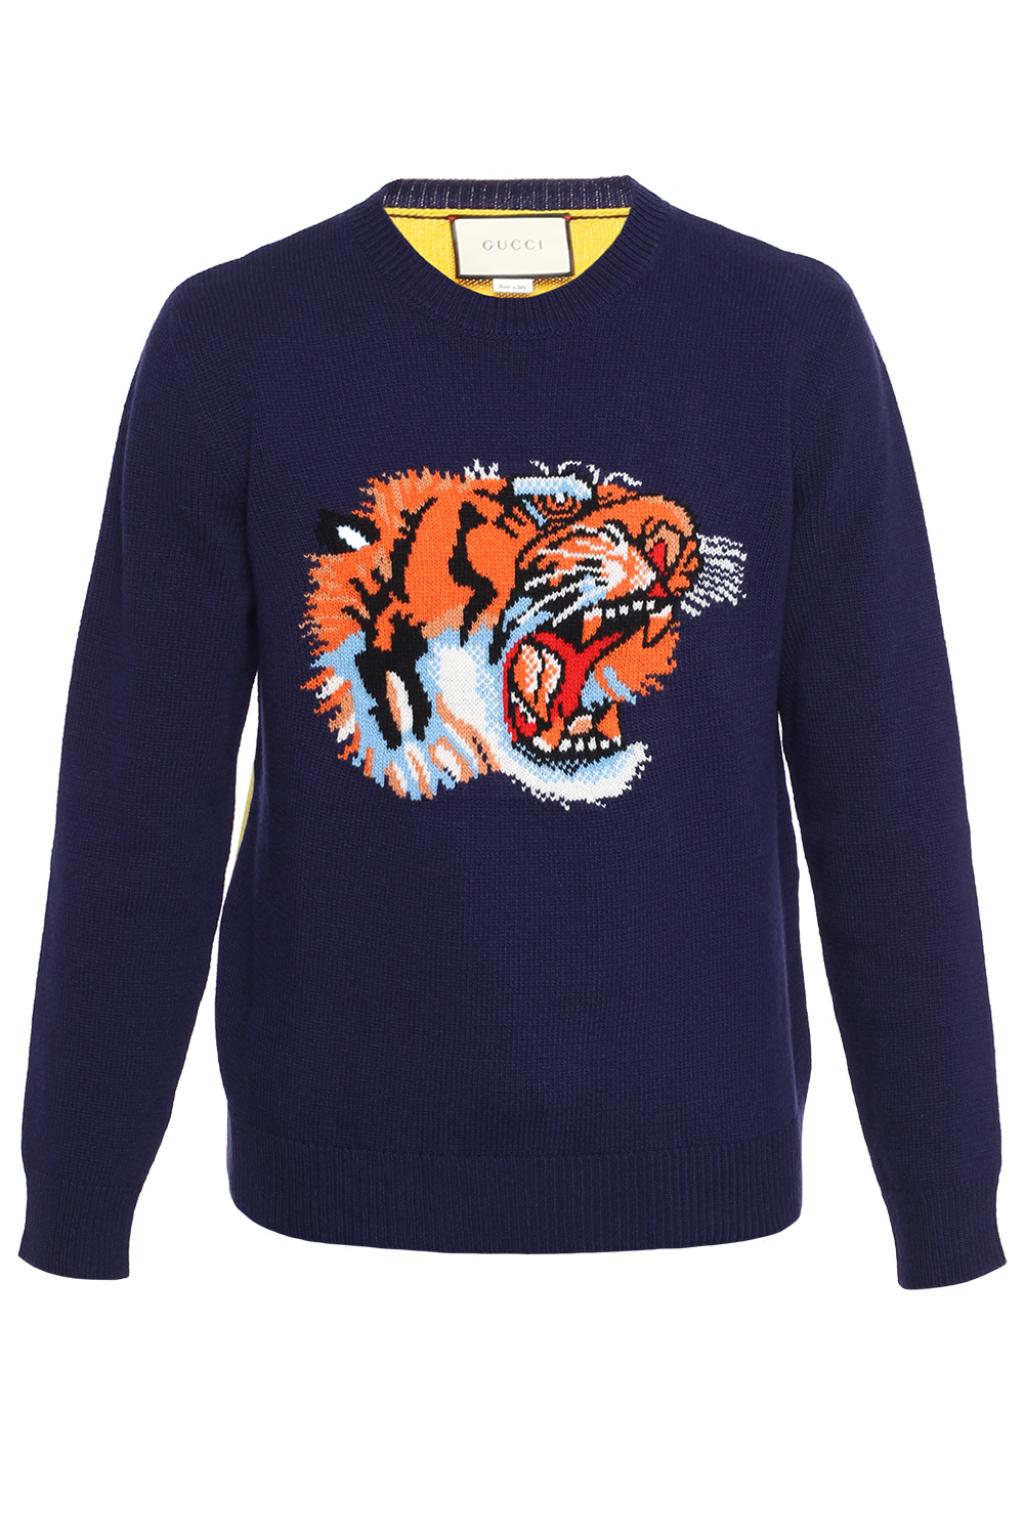 Tiger head sweater Gucci - Vitkac Italy